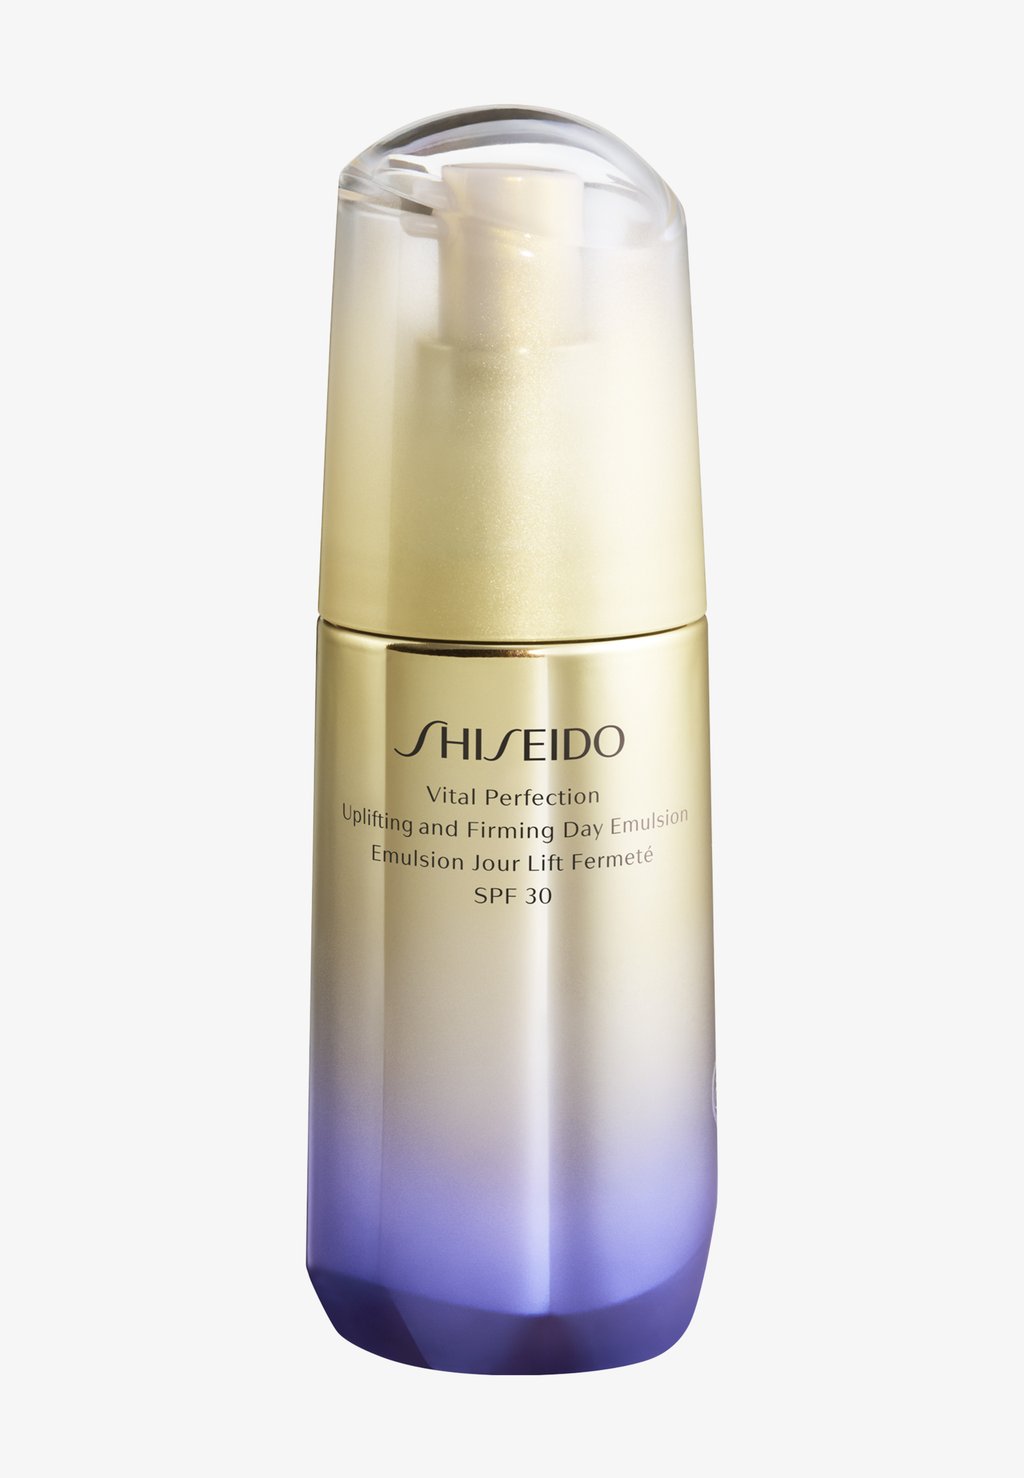 Дневной крем Vital Perfection Uplifting And Firming Day Emulsion Spf30 75Ml Shiseido фото